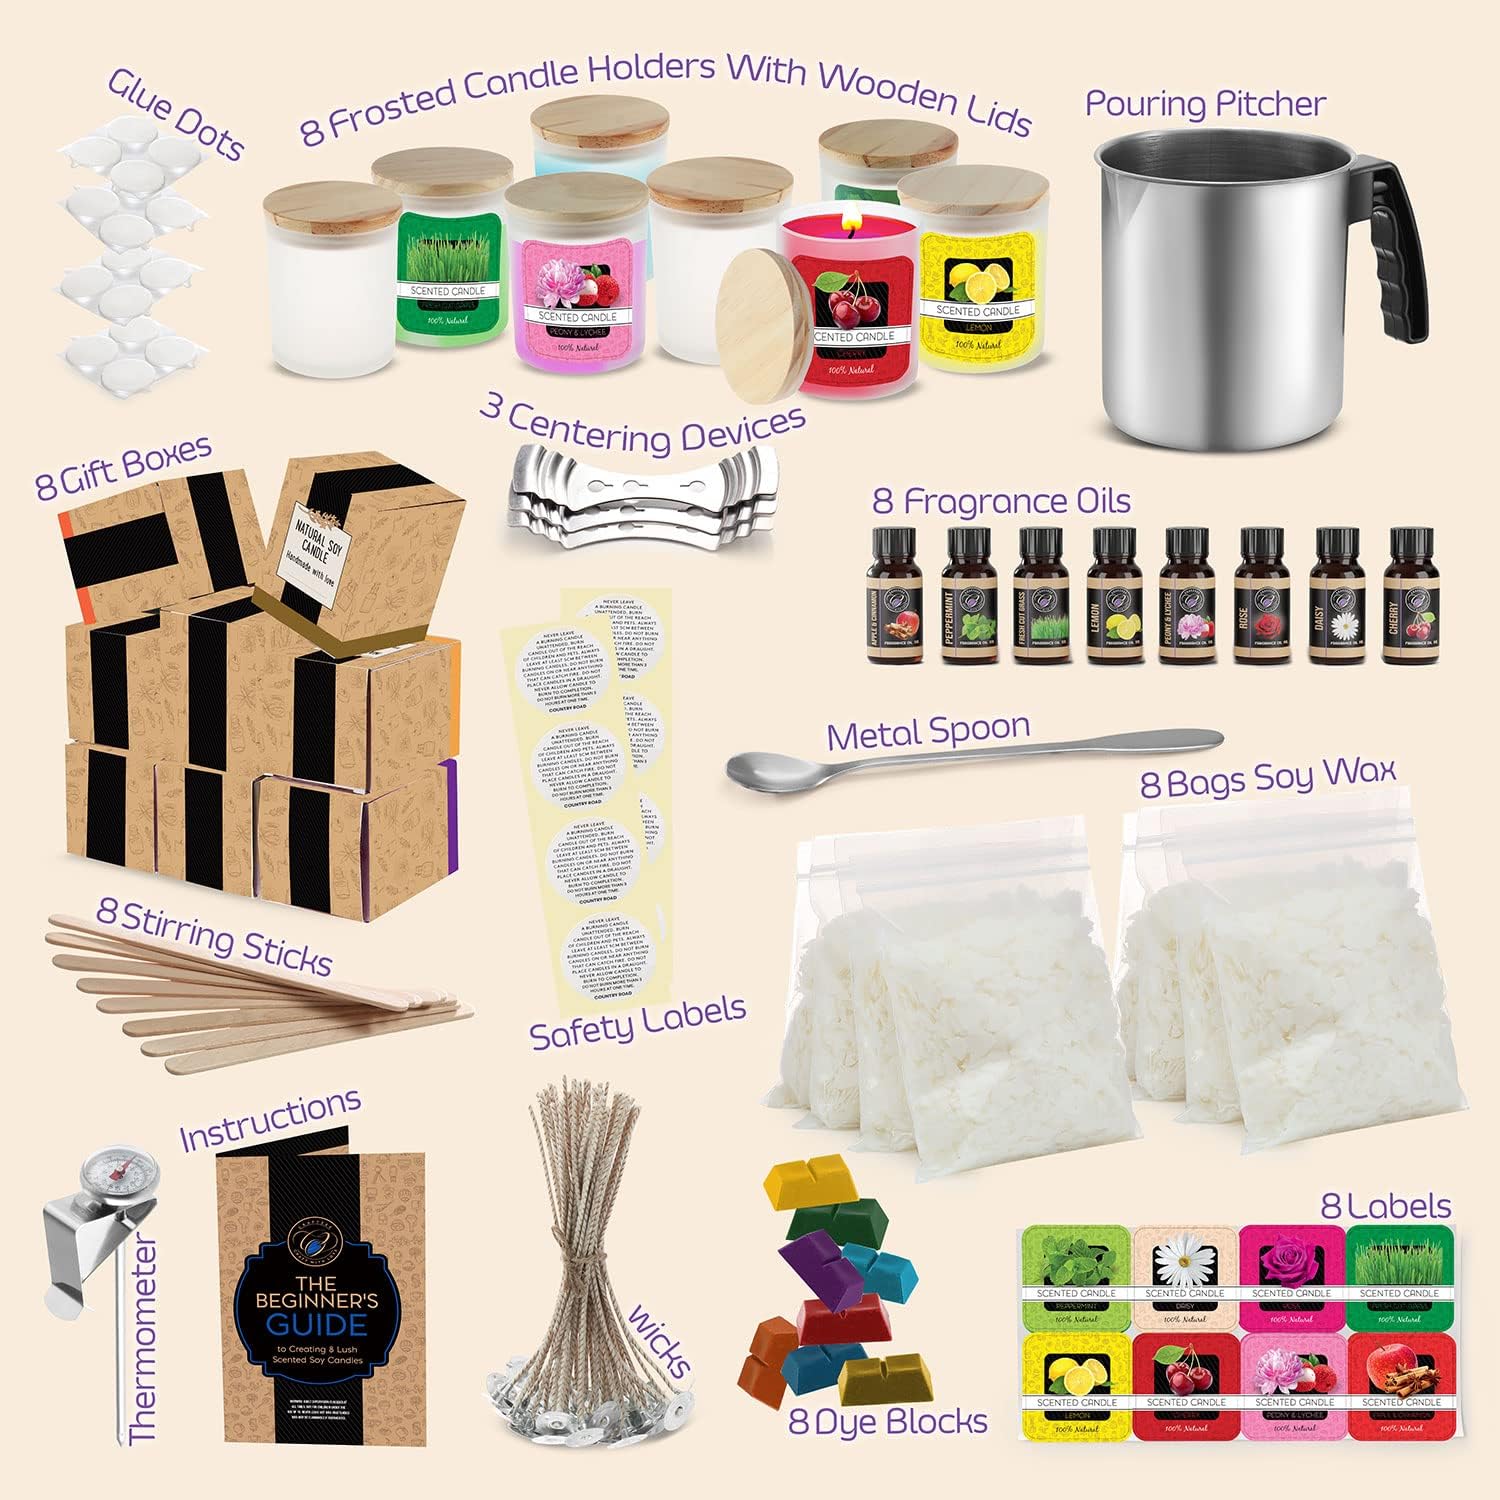 Soy Candle Making Kit – DIY Gift Kits